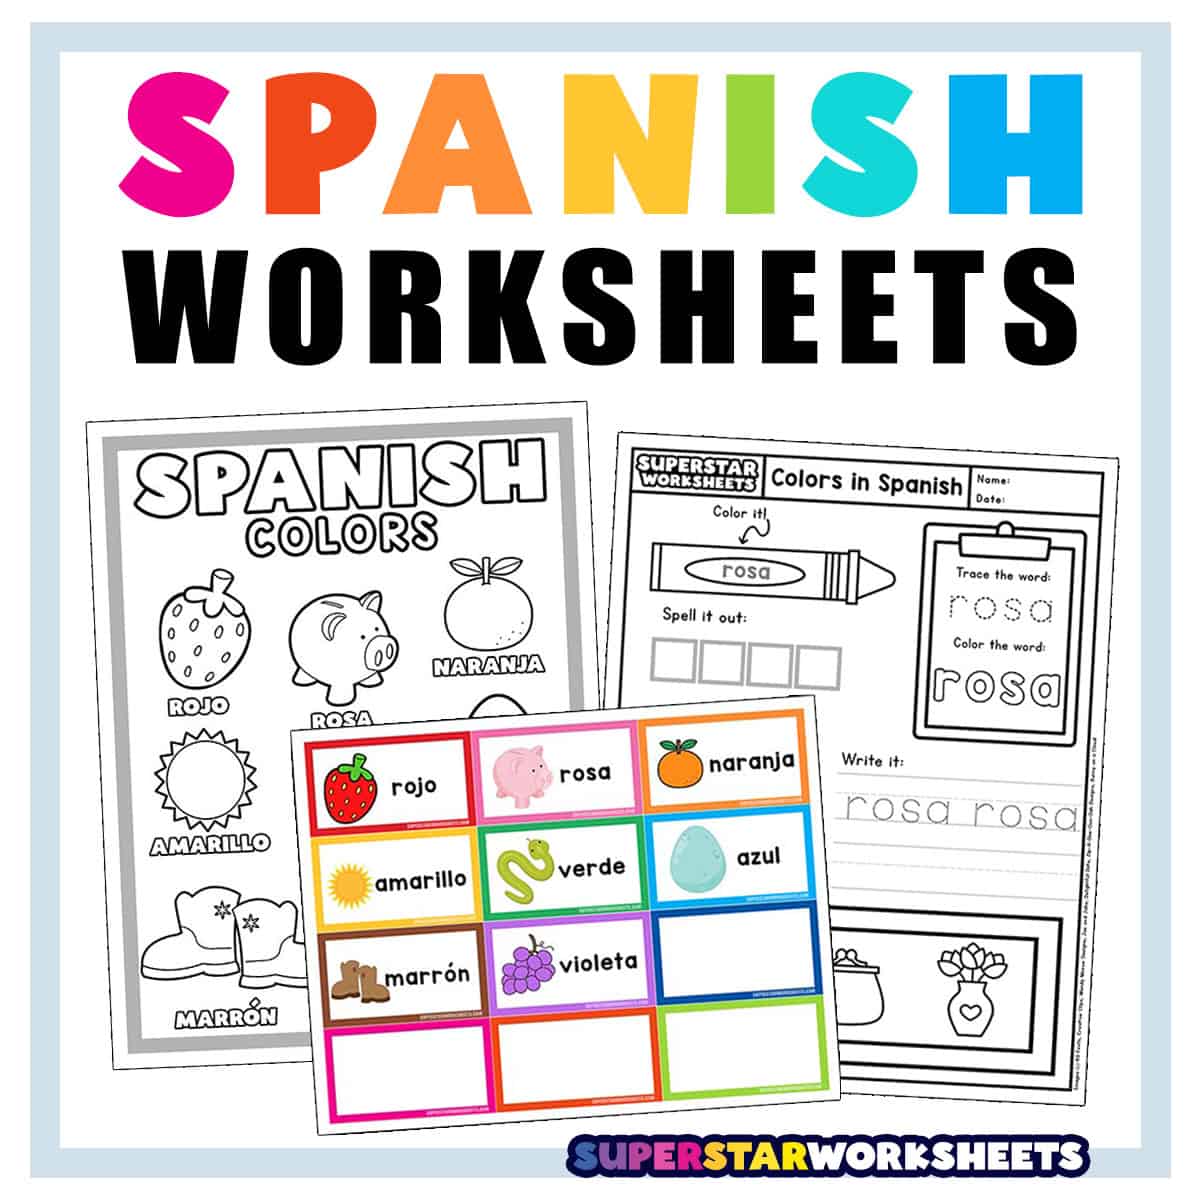 SpanishWorksheets 